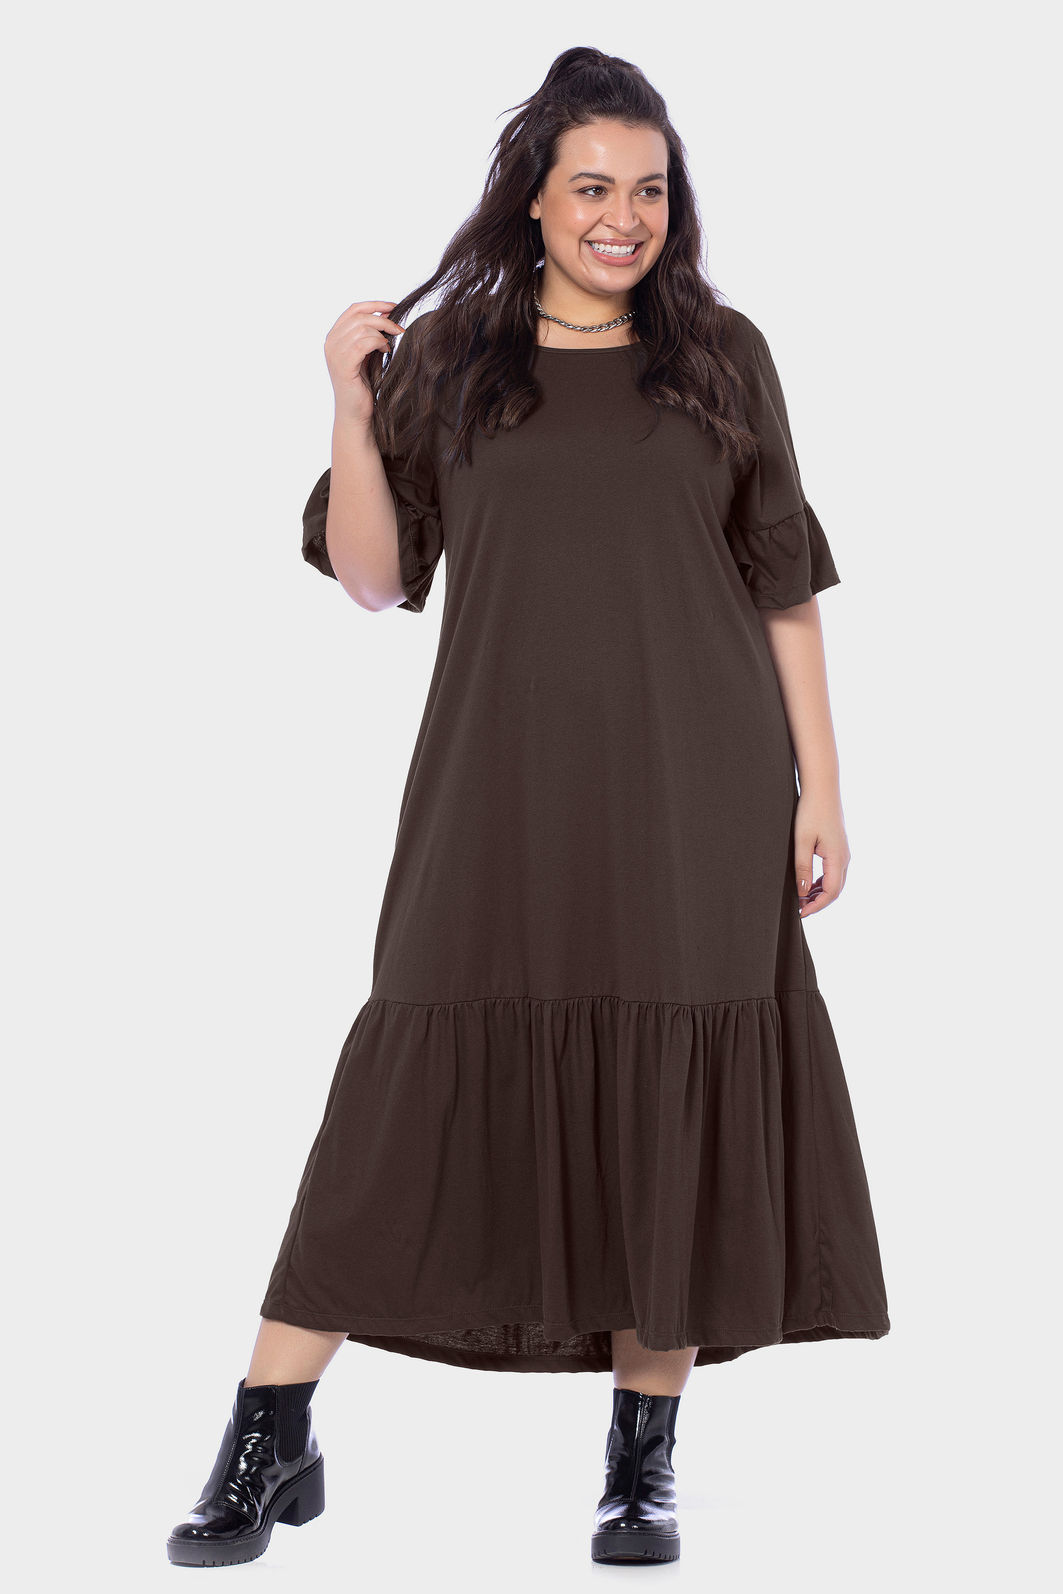 Vestido Feminino Plus Size Liso com Babados BGO Company - Loja Virtual